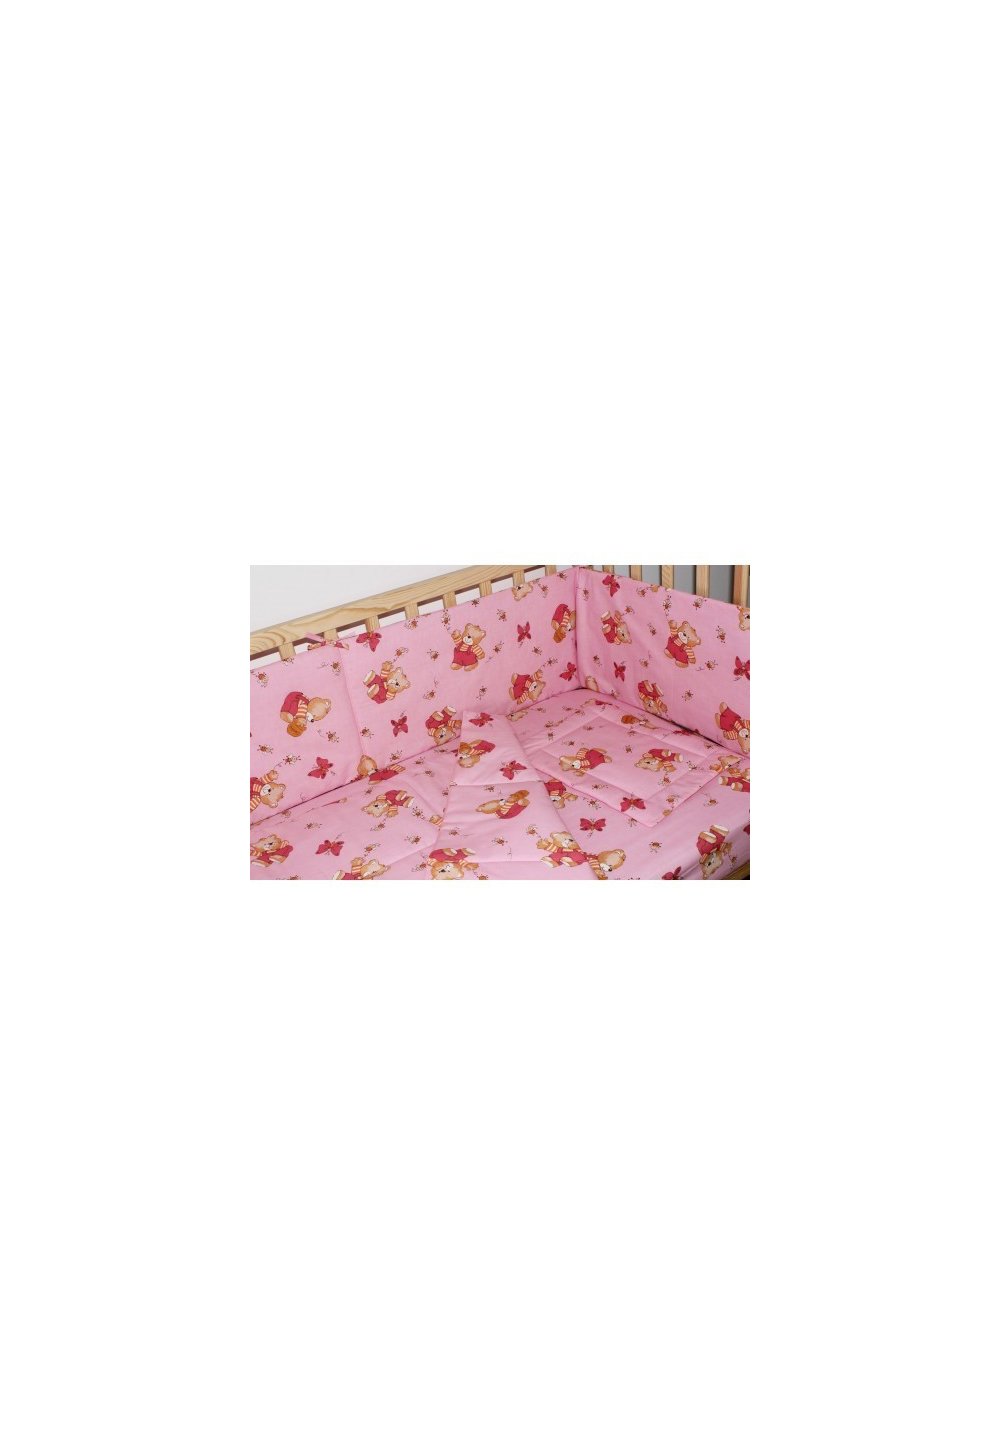 Lenjerie ursulet cu albinute roz,5 piese 140x70 cm